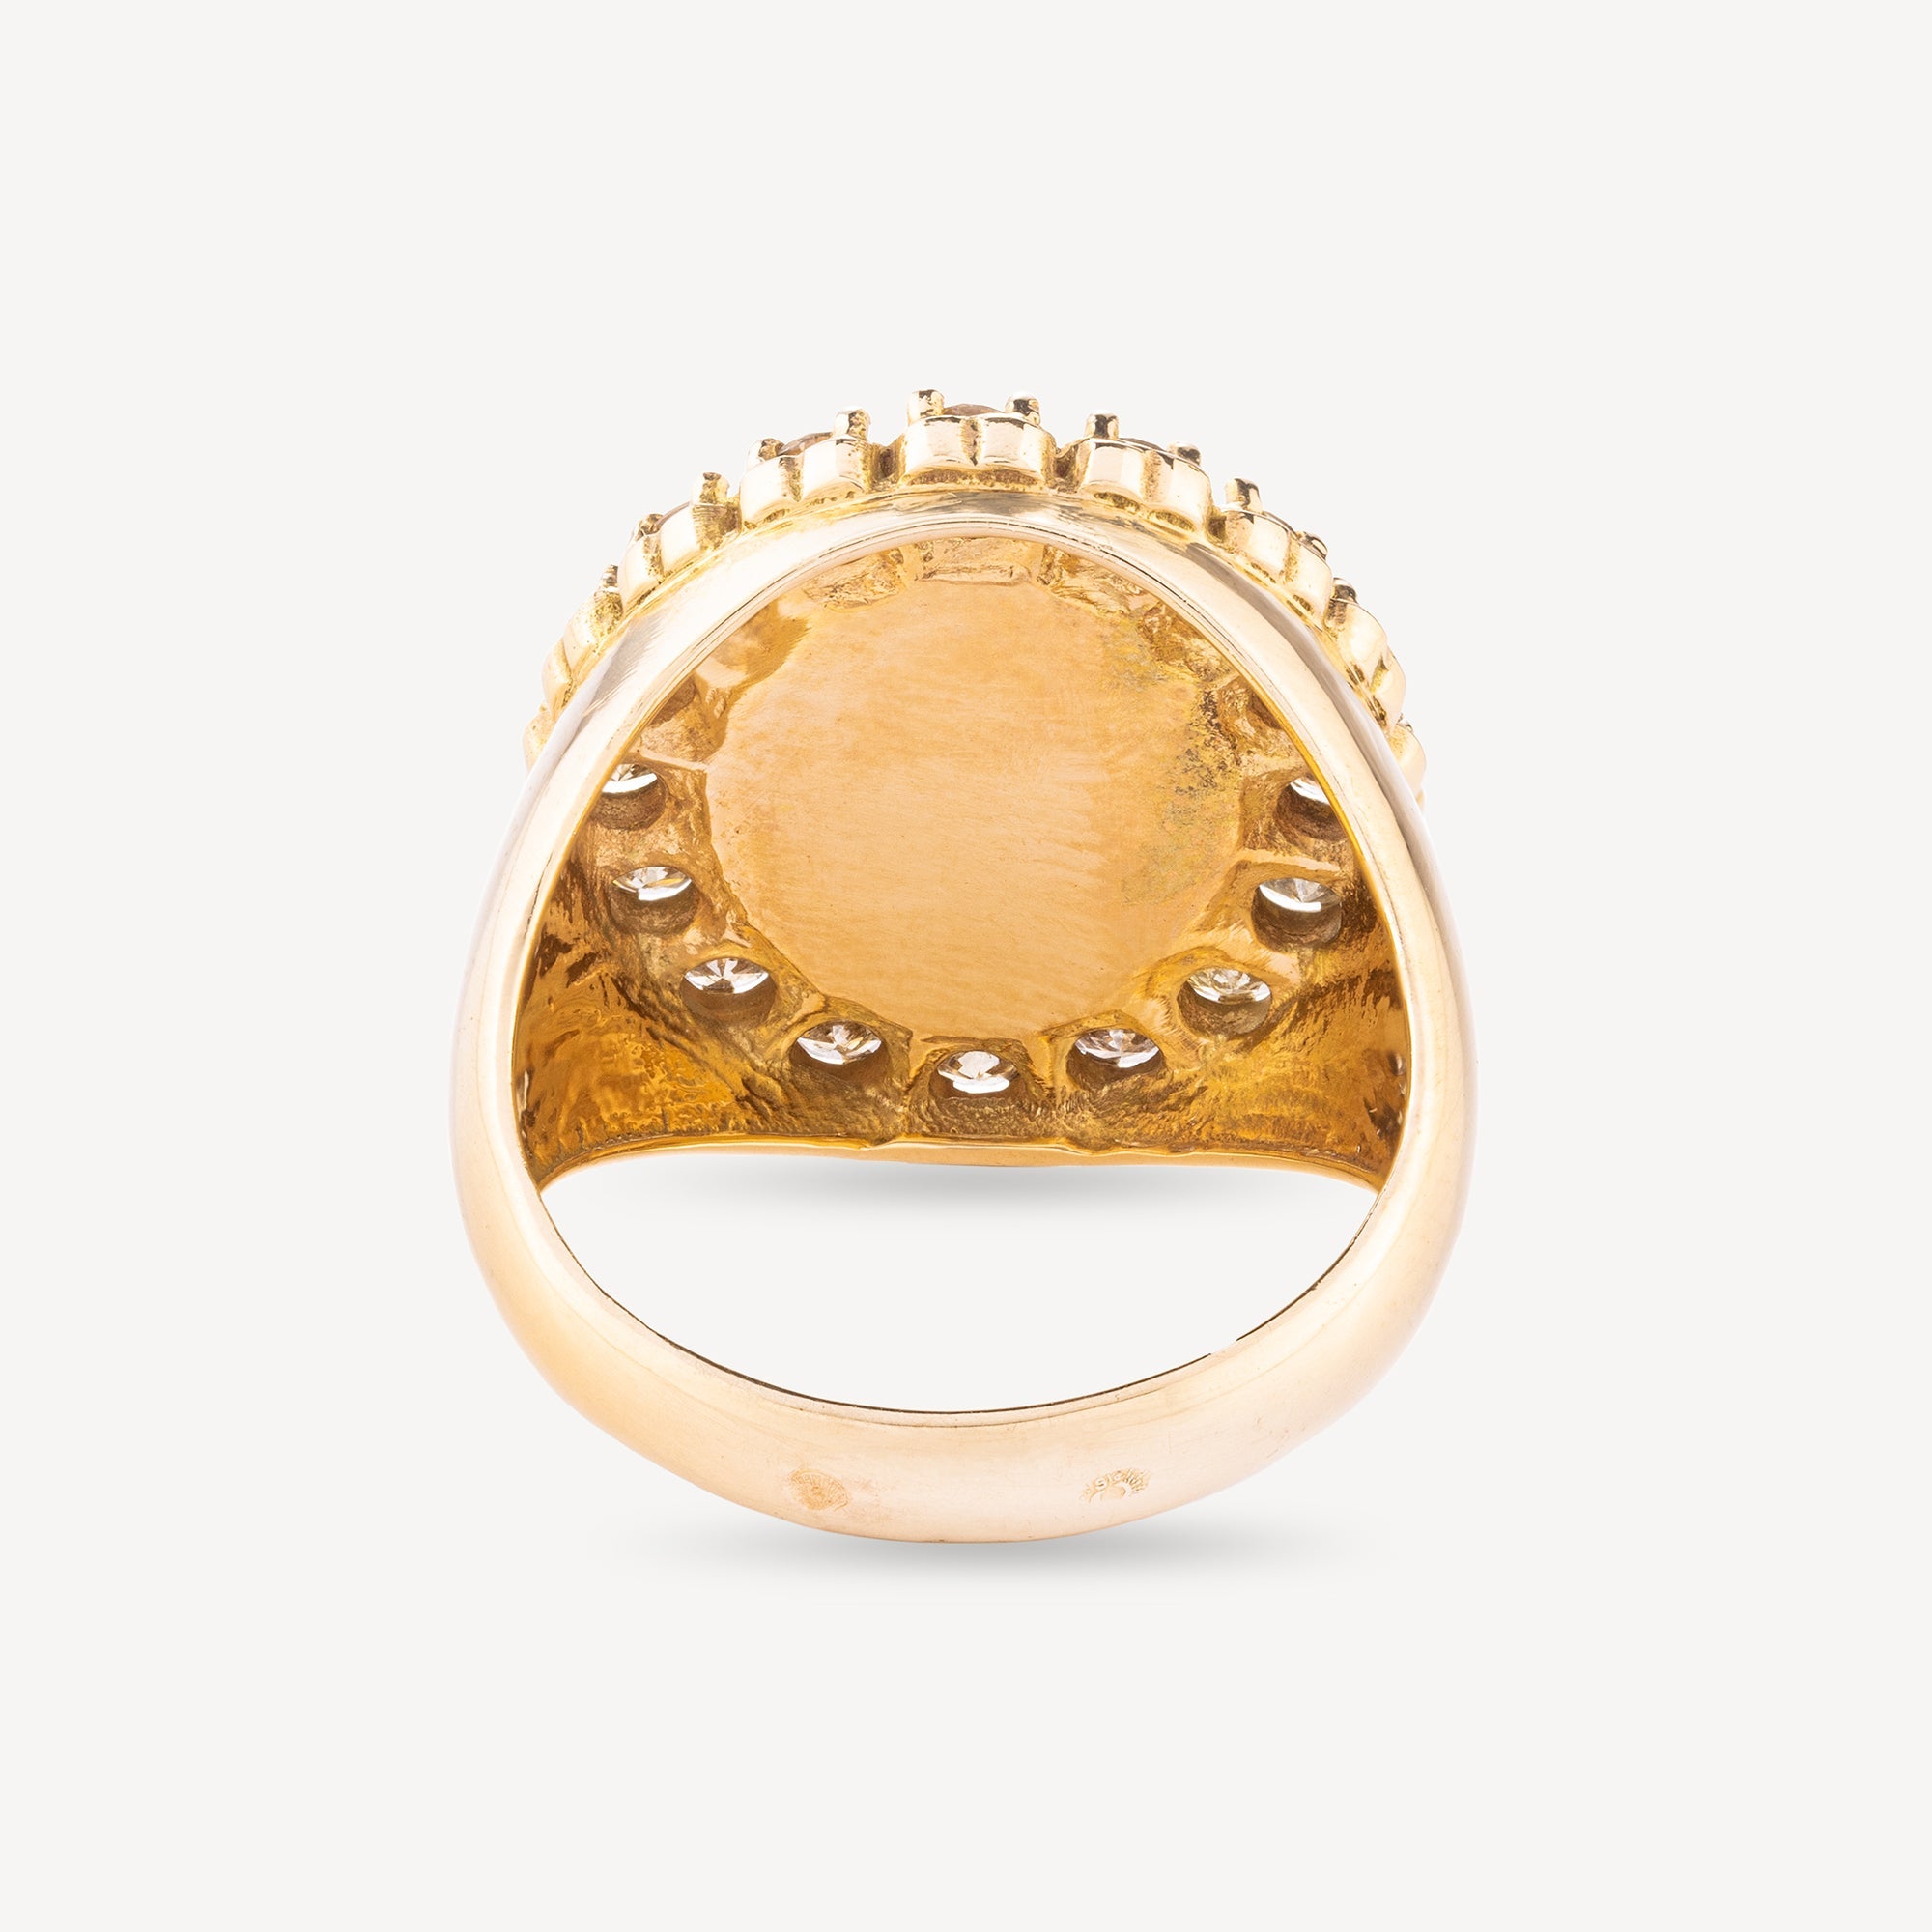 The Ganesha Gold Ring